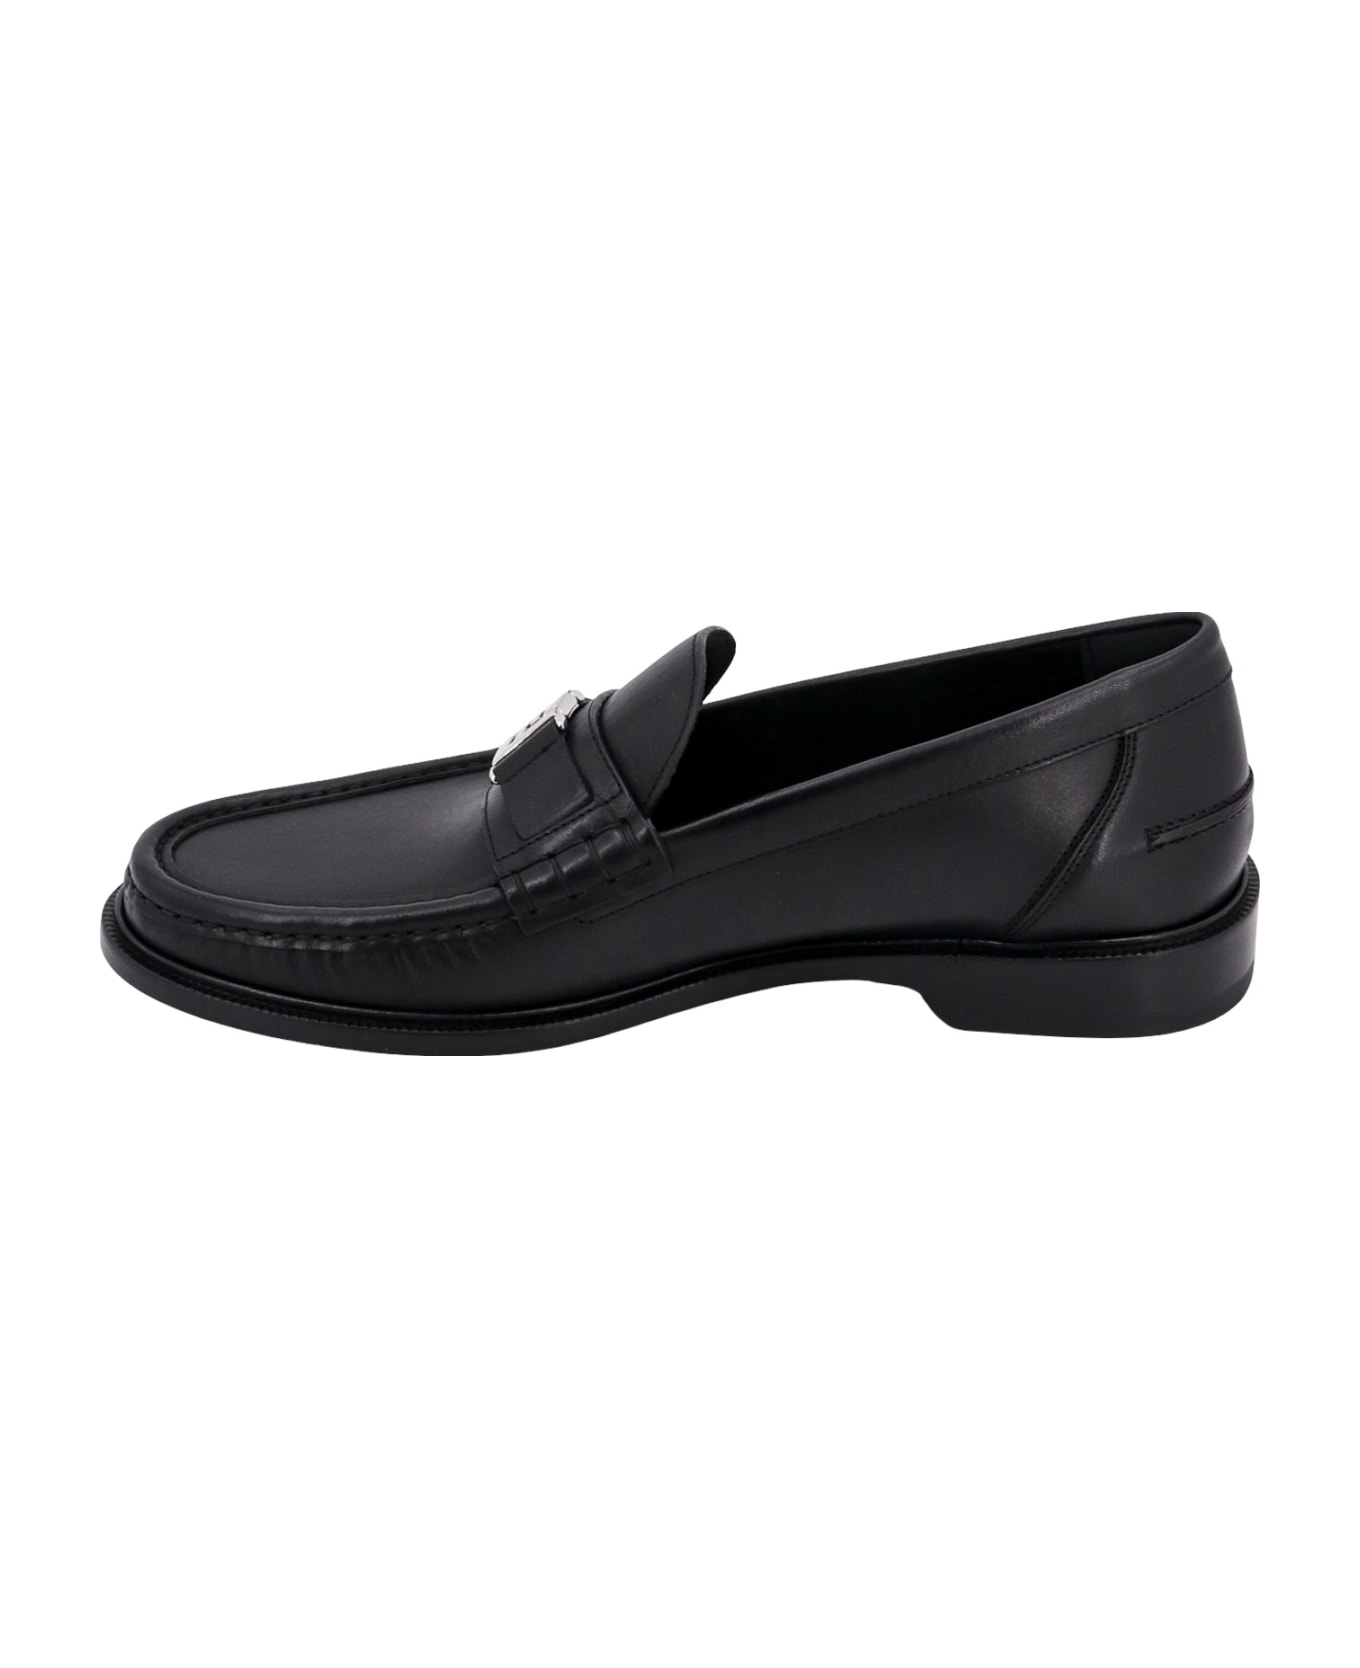 Fendi Ff Squared Loafers - Black